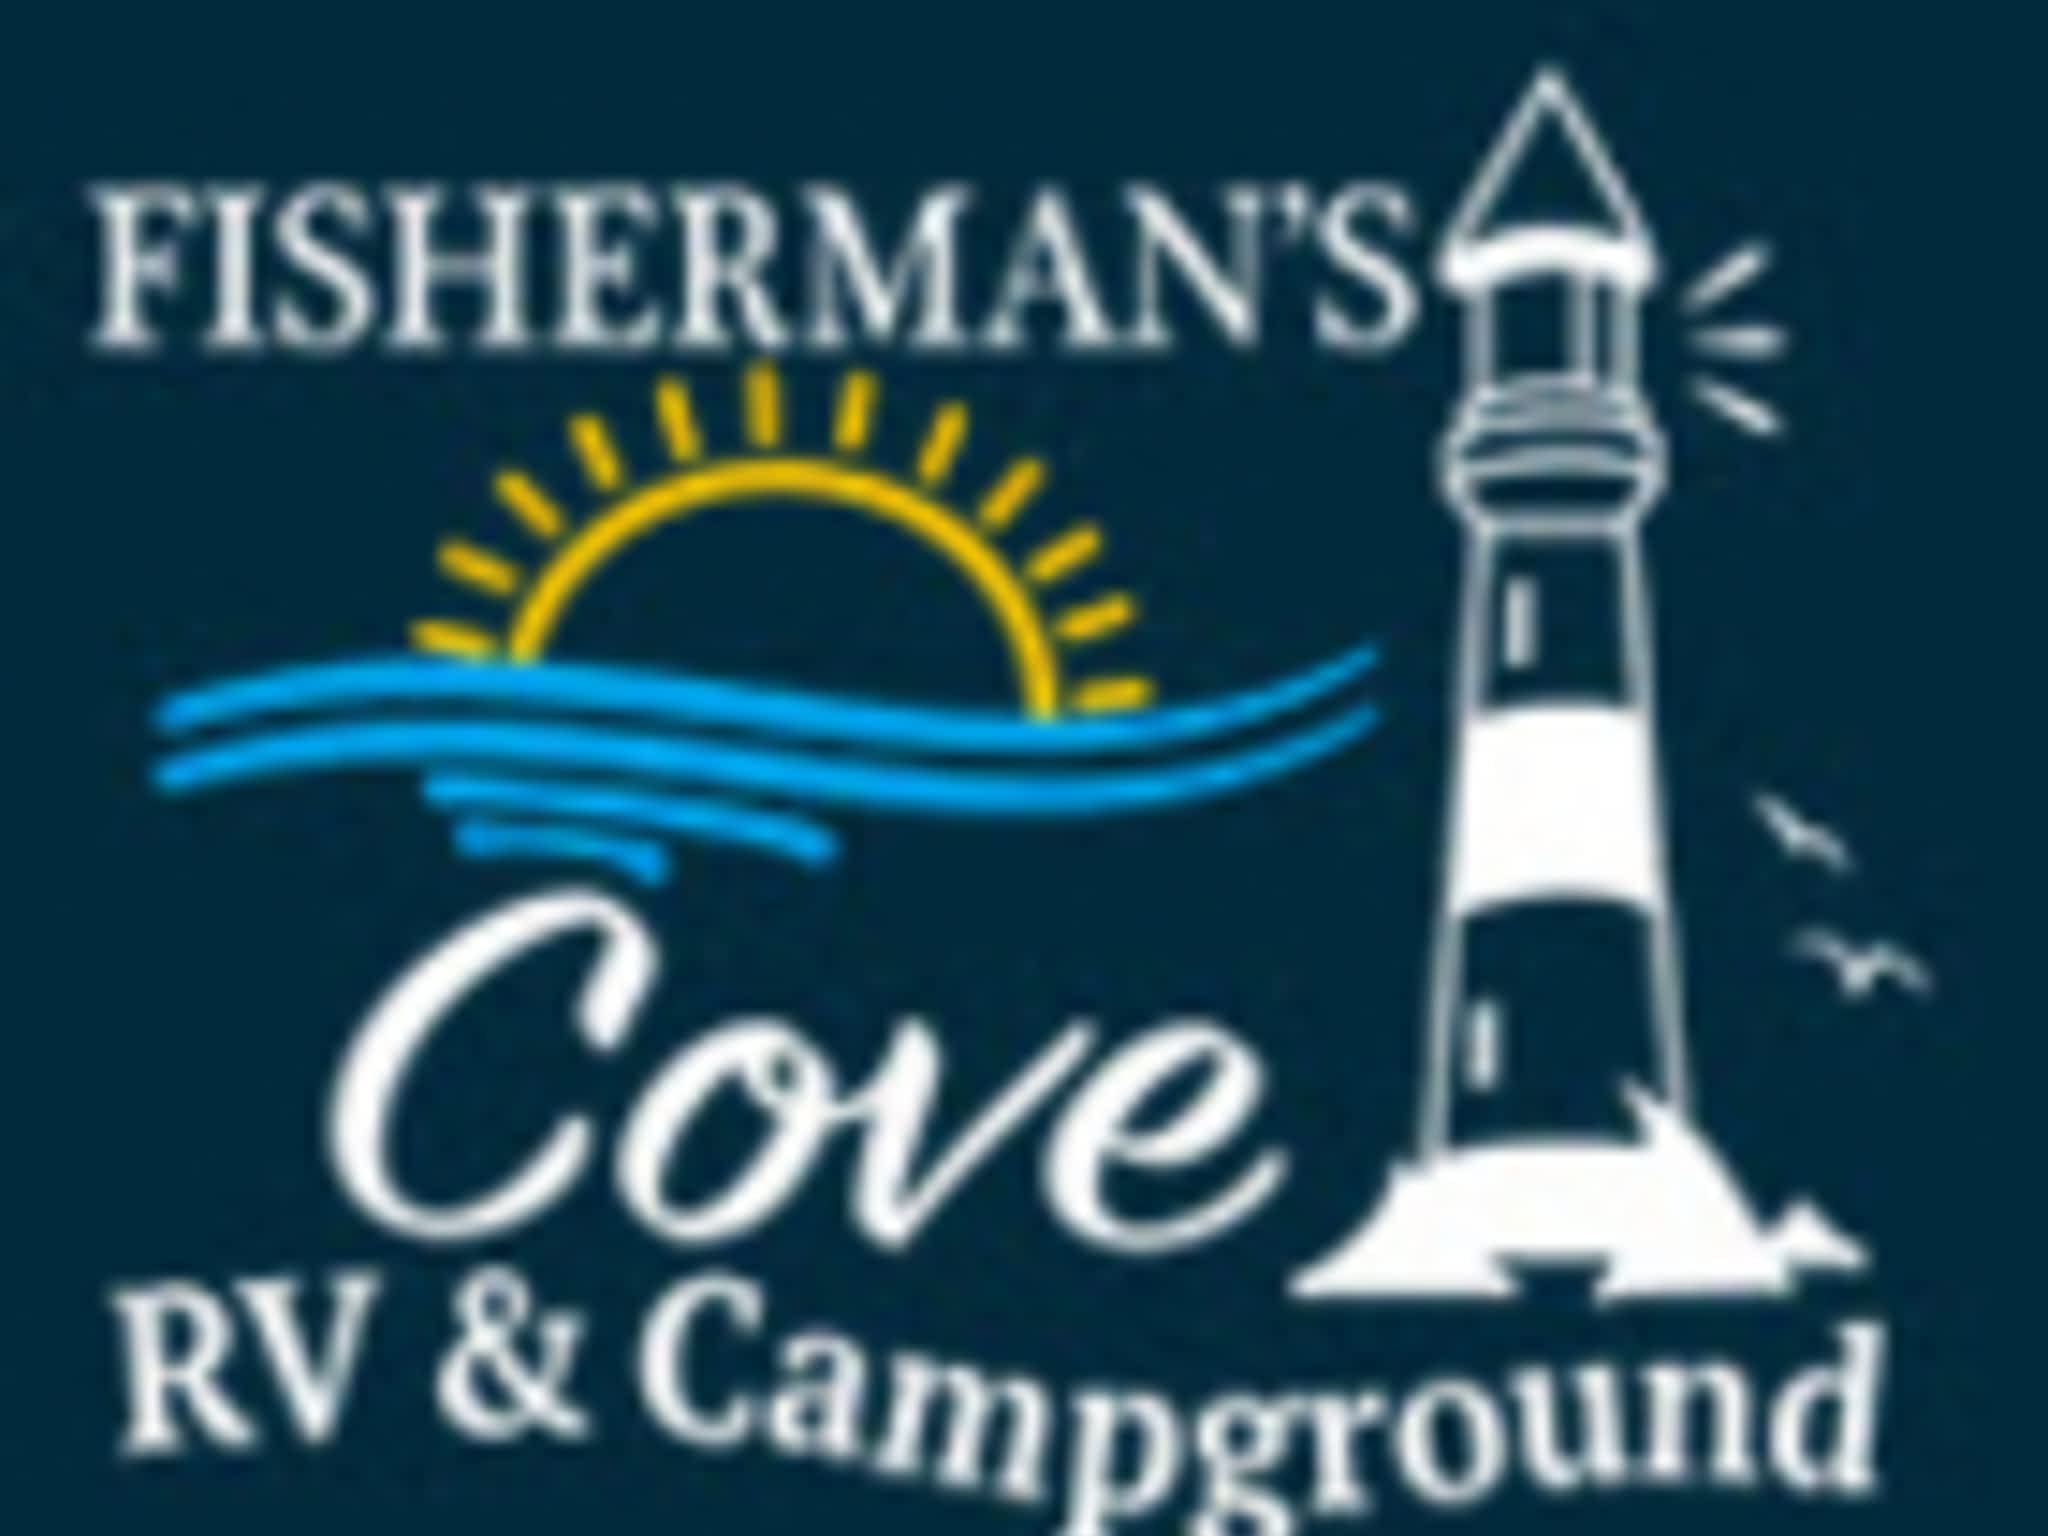 photo Fisherman's Cove RV and Campground